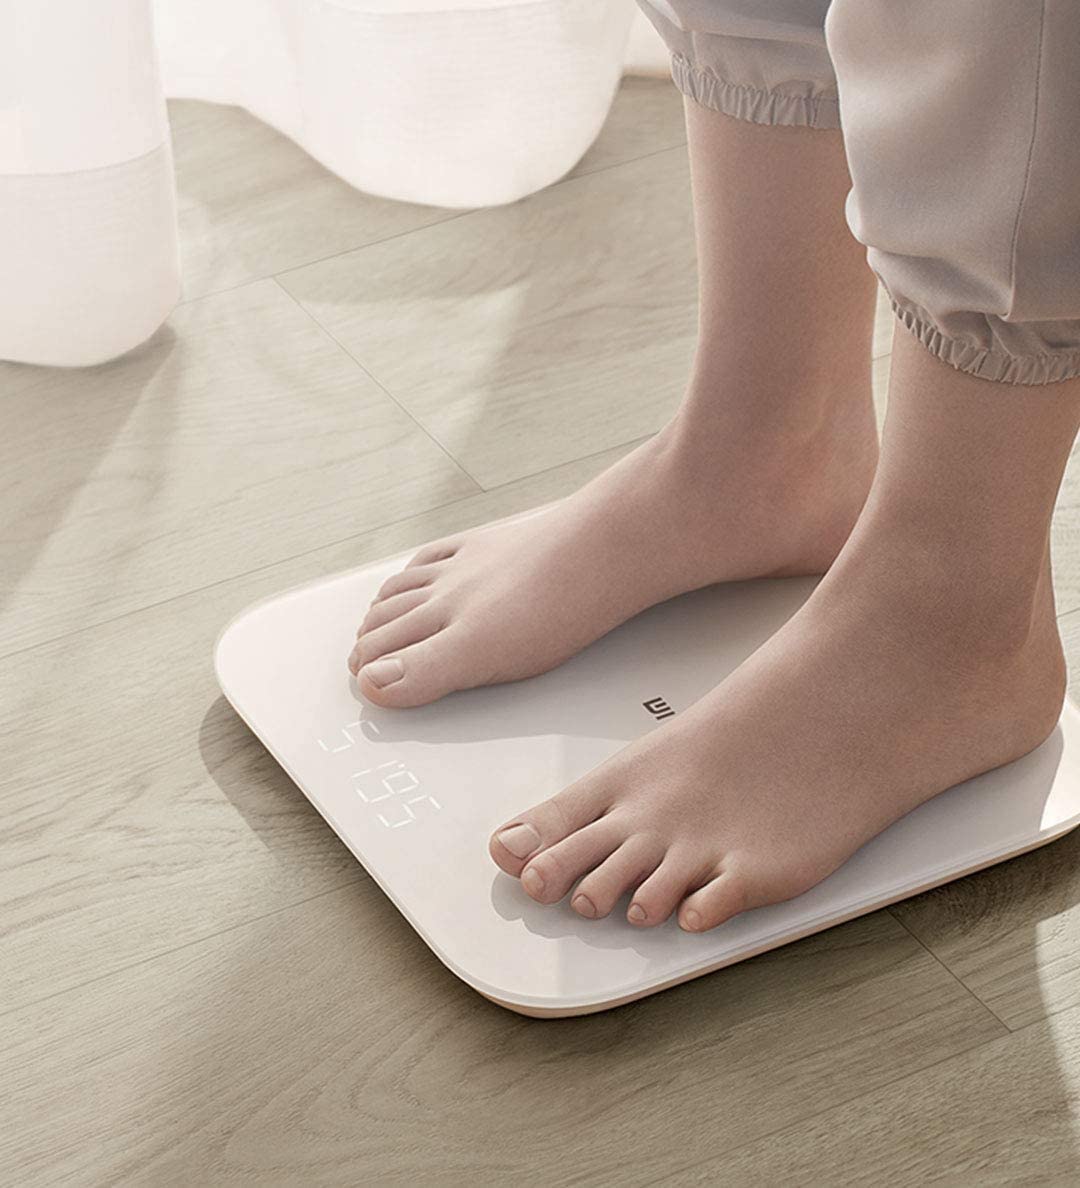 Xiaomi Mi Smart Scale 2, Bathroom, High-Precision Accuracy, BMI Calculator & LED Display - White